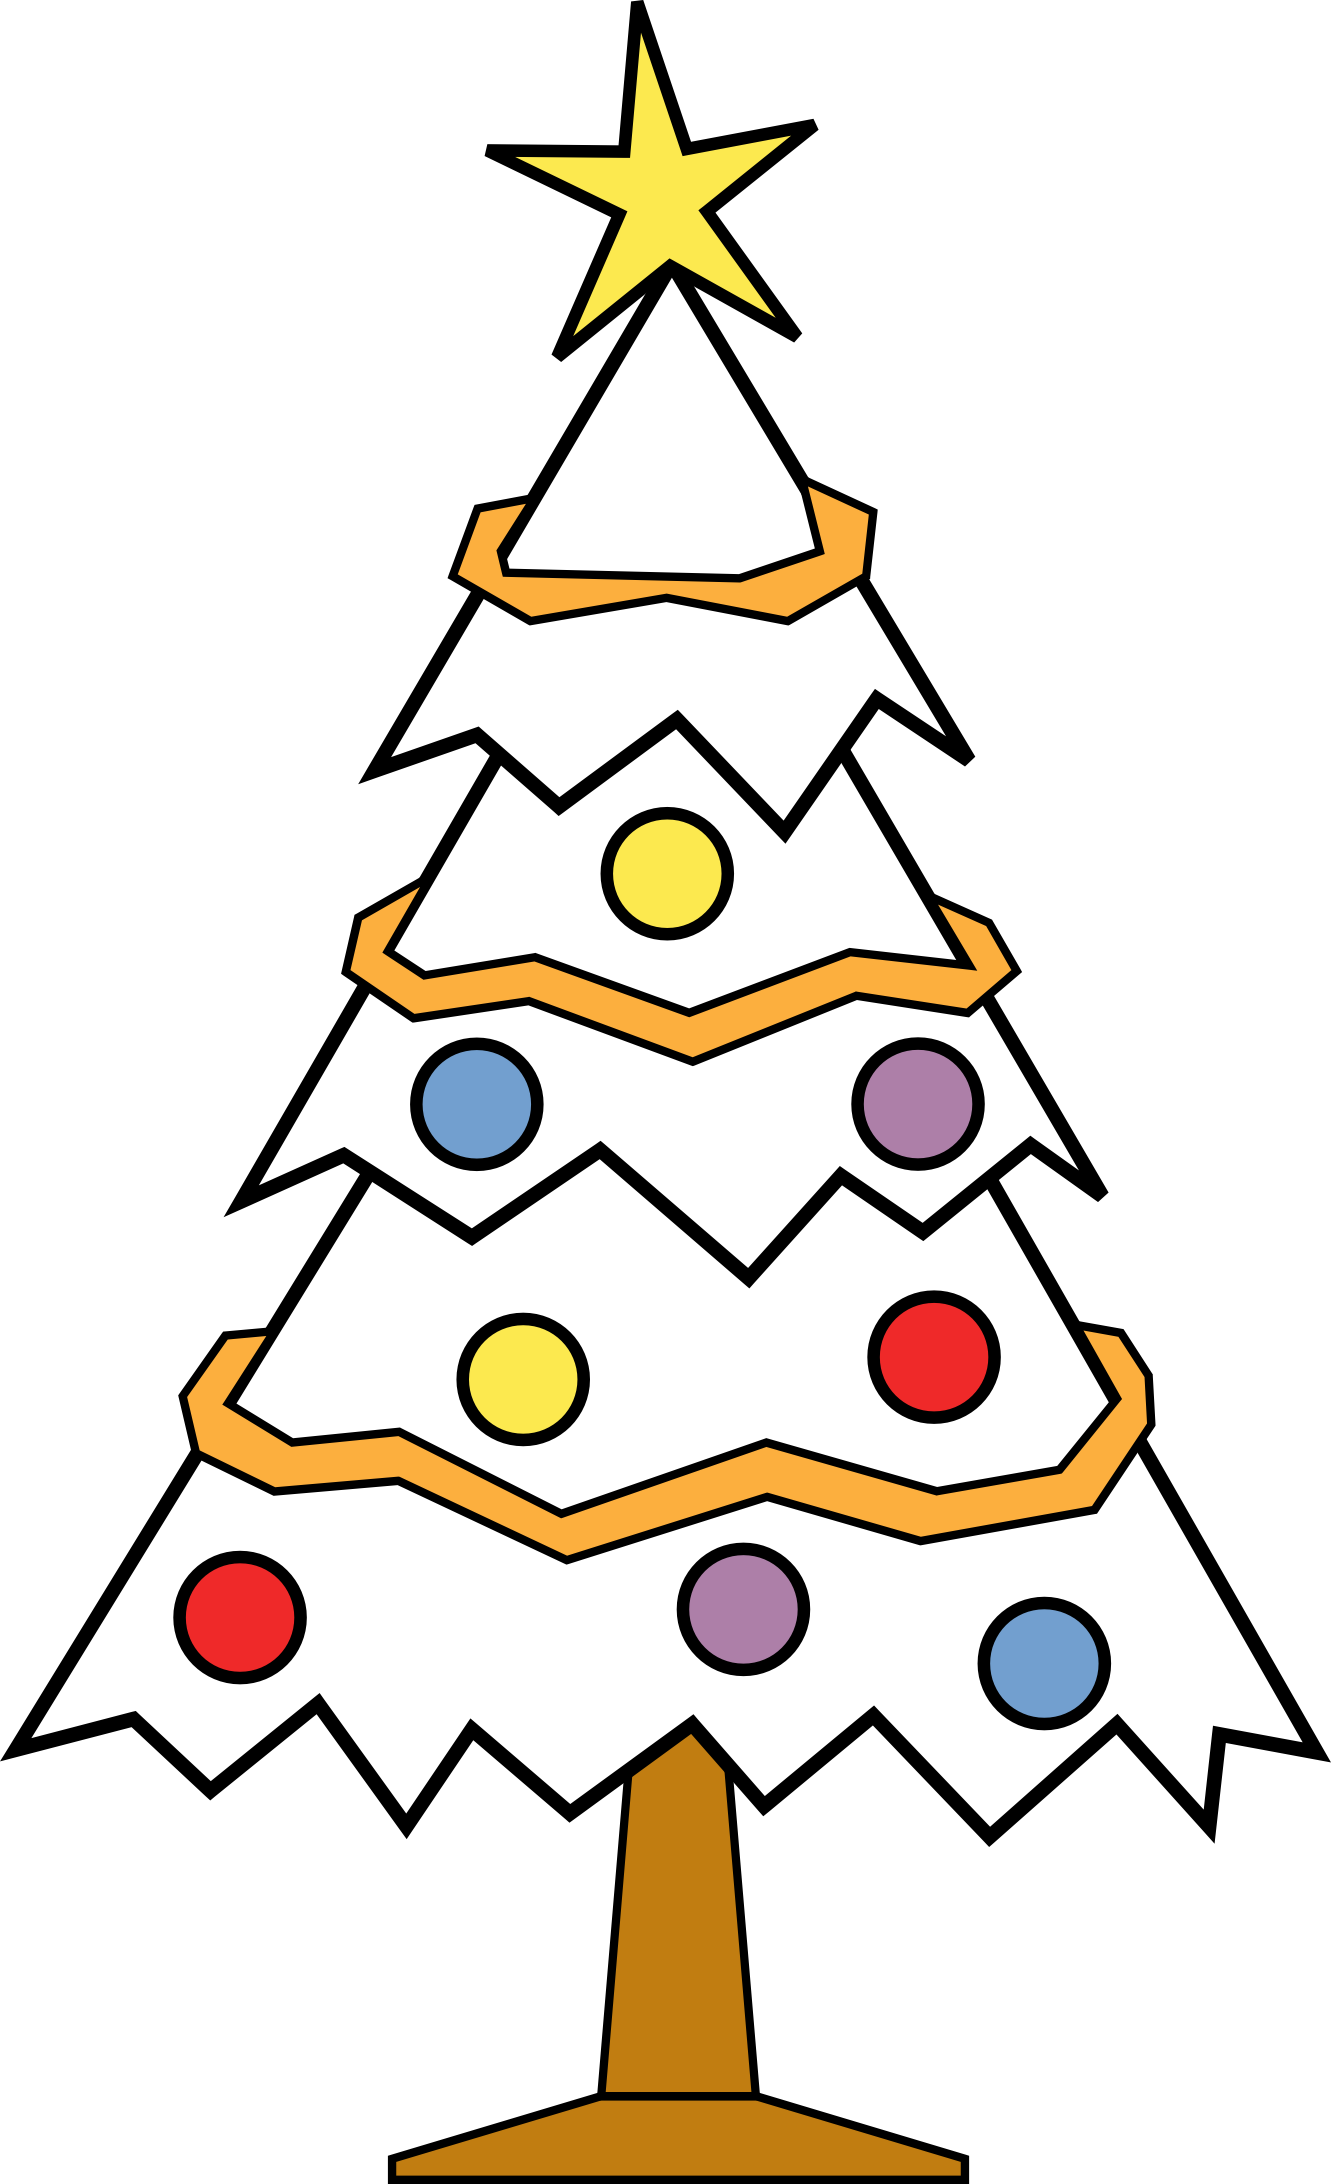 Christmas tree artwork clipart